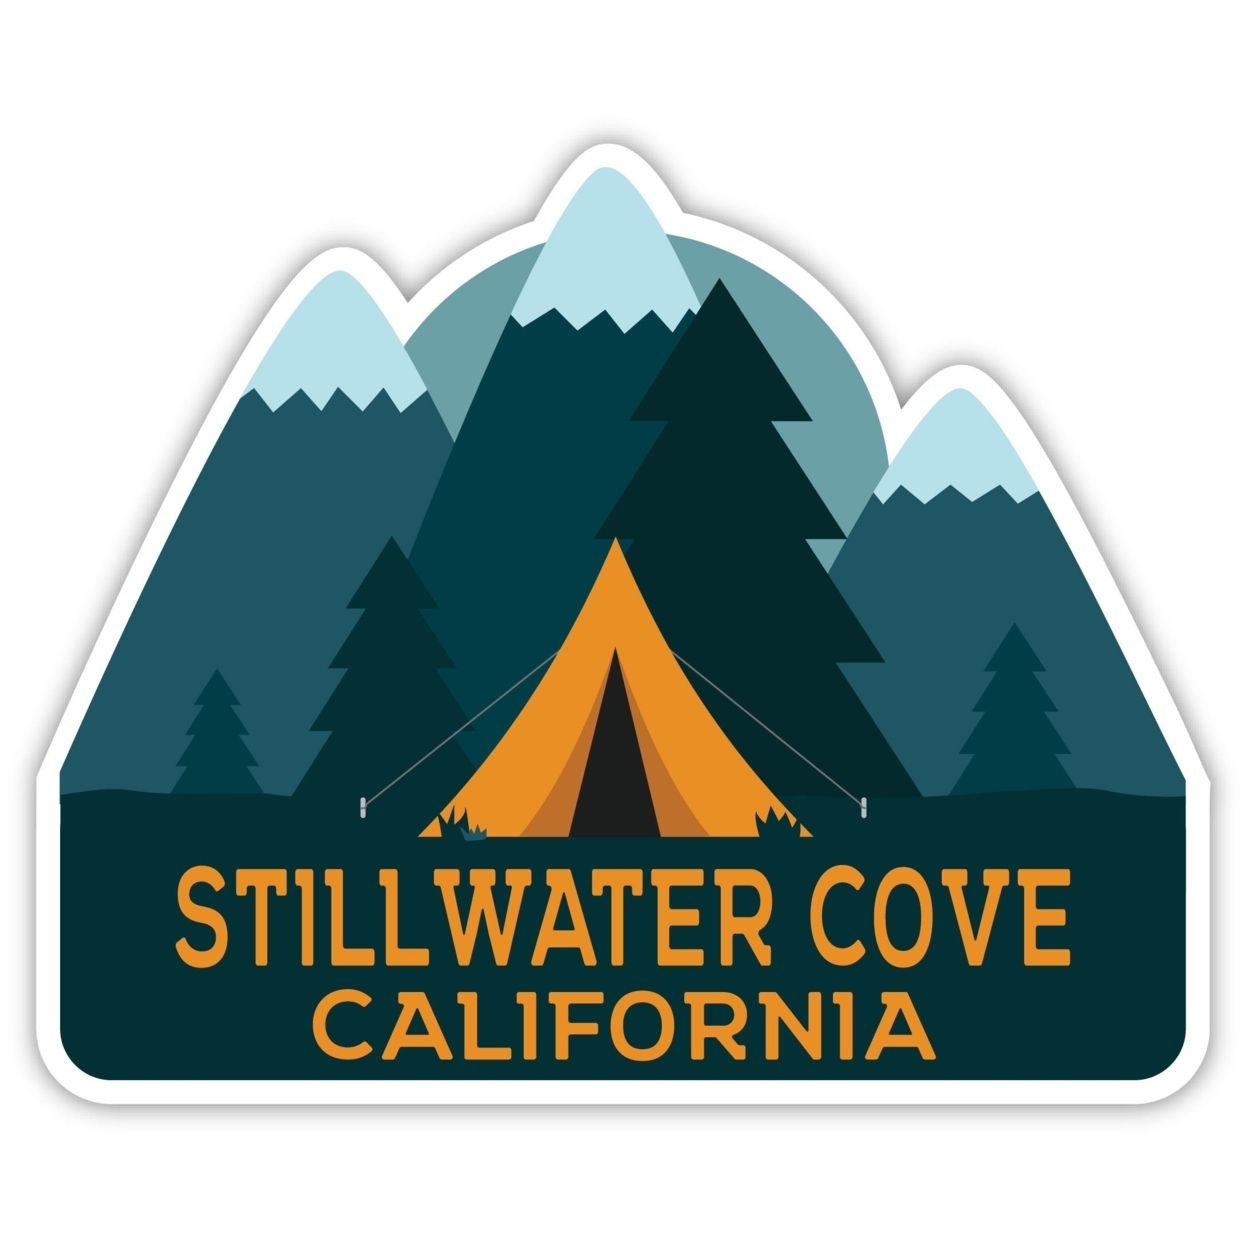 Stillwater Cove California Souvenir Decorative Stickers (Choose Theme And Size) - Single Unit, 2-Inch, Tent